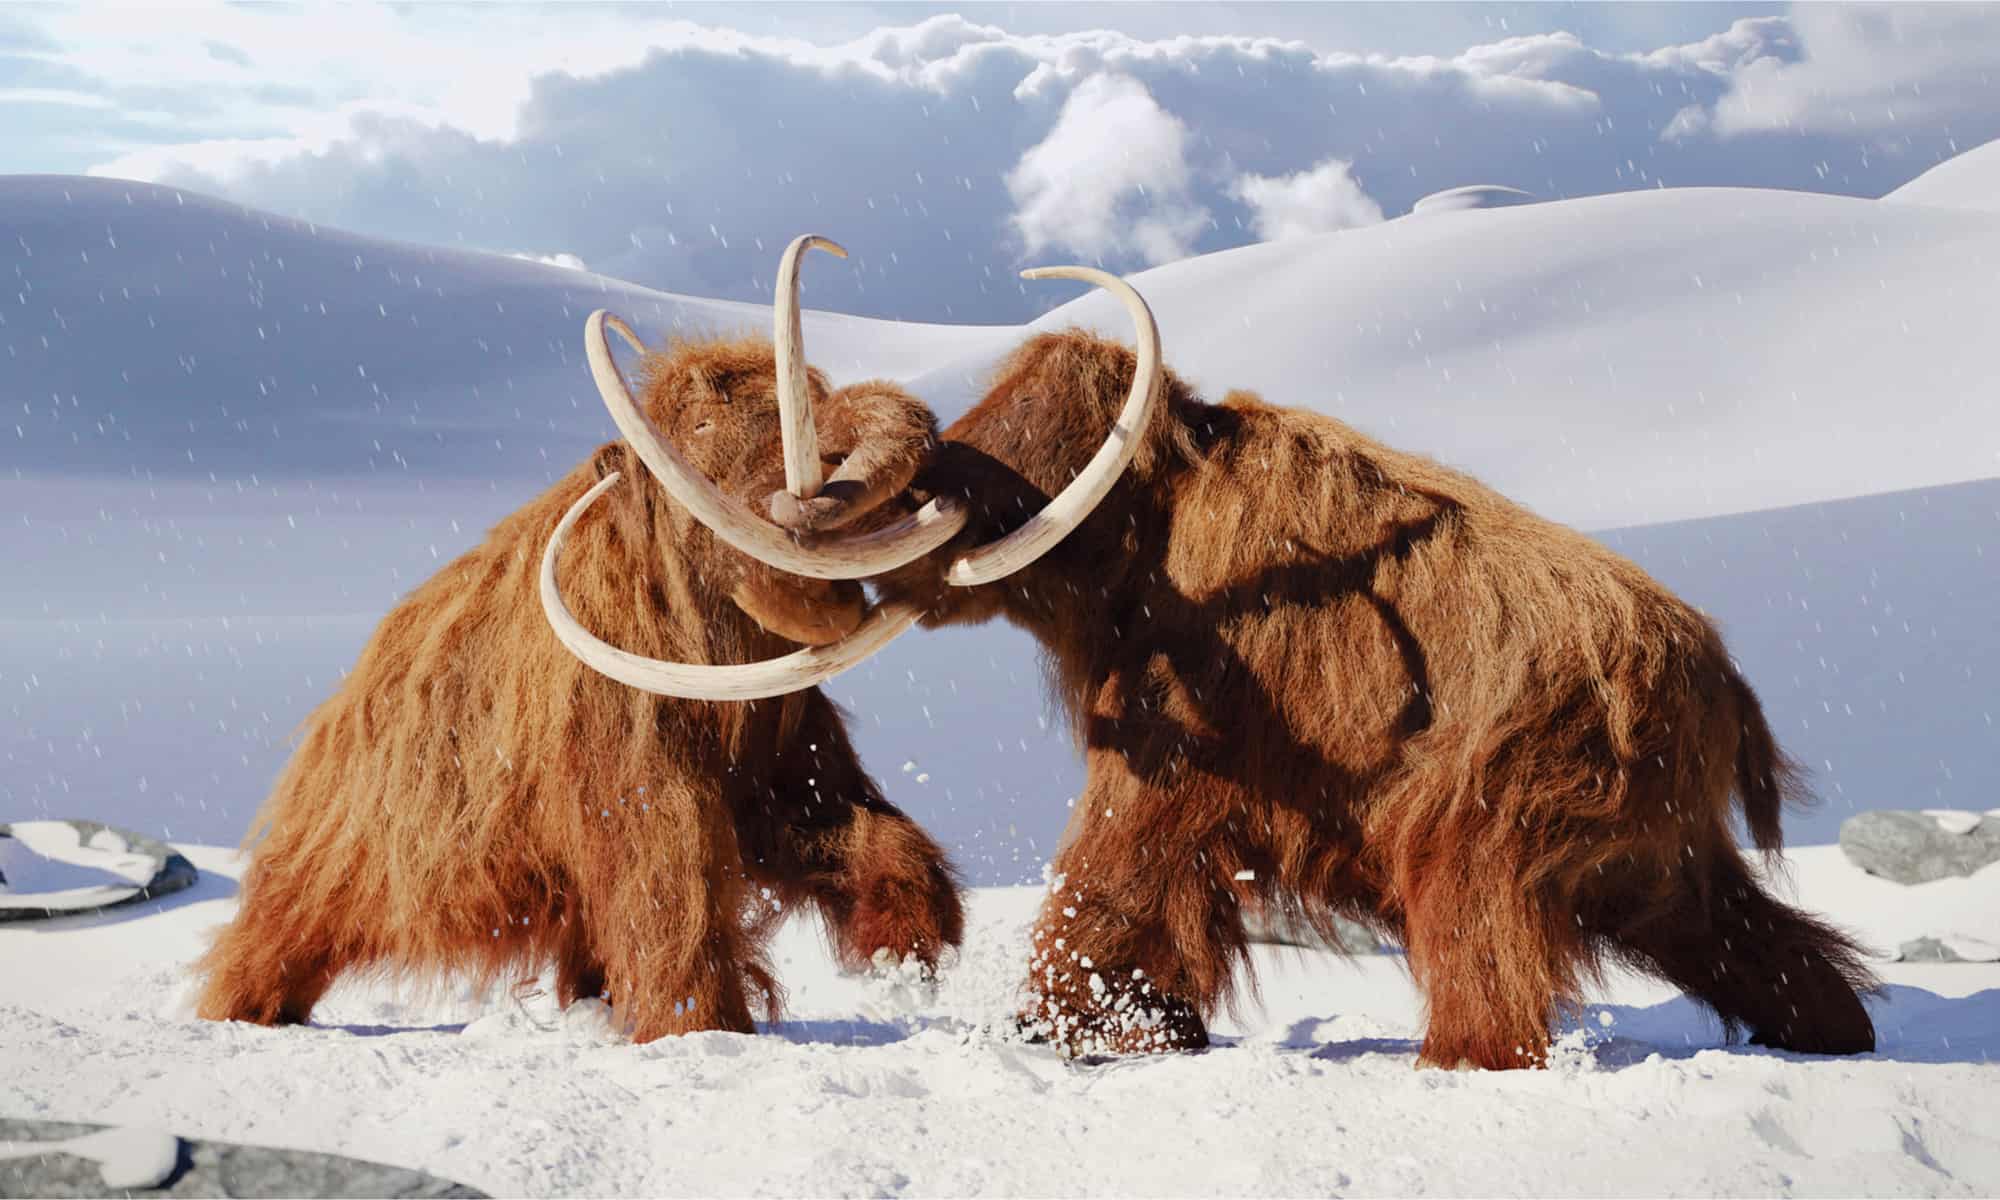 2 woolly mammoths fighting in a snowy landscape